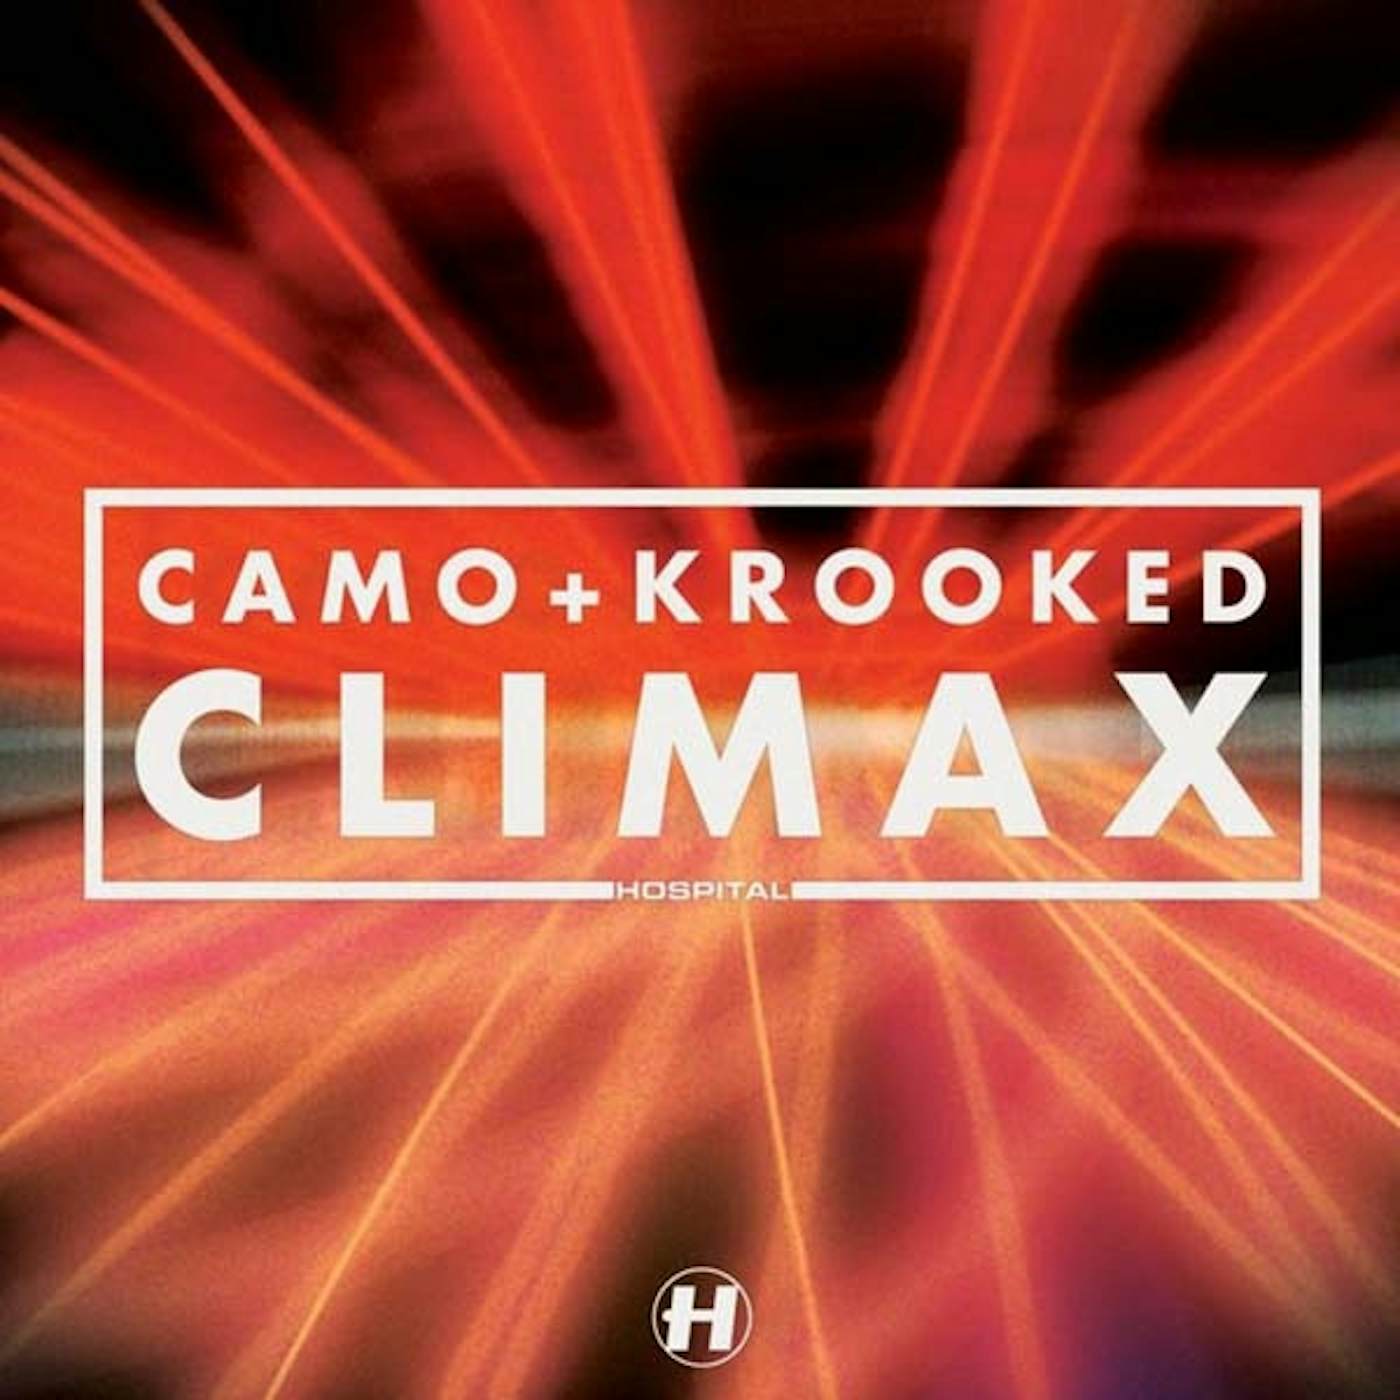 Camo & Krooked REINCARNATION/CLIMAX Vinyl Record - UK Release